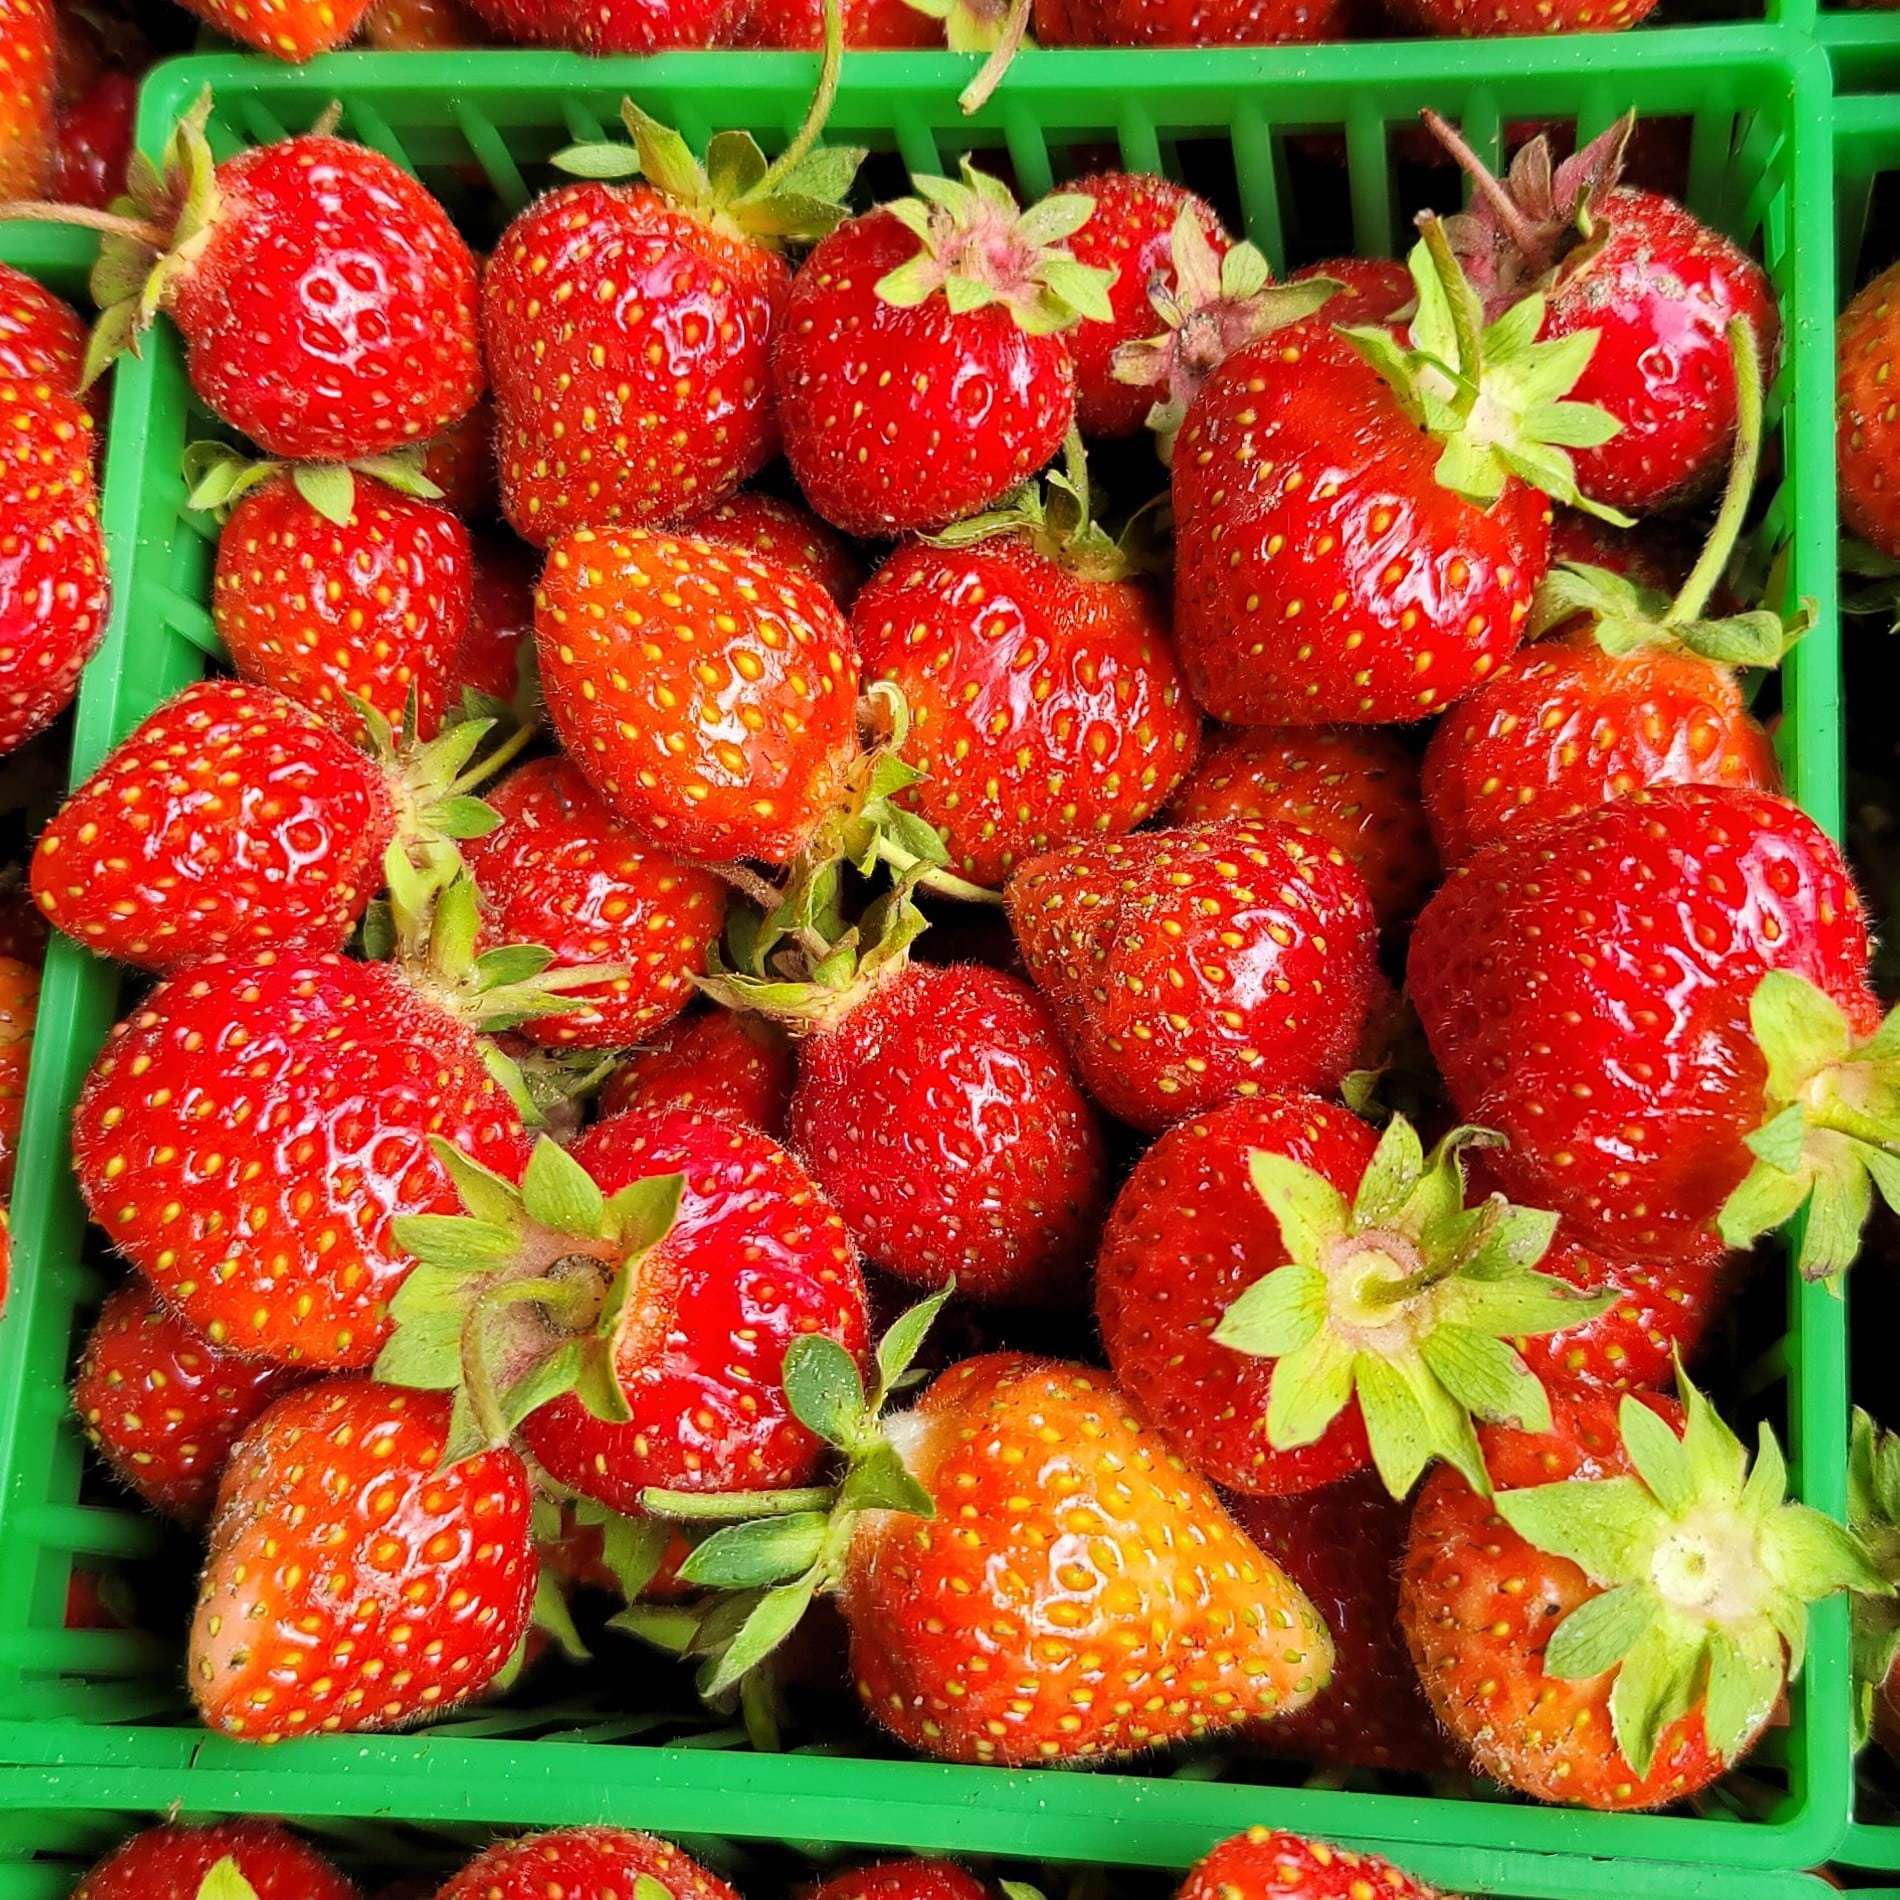 Organic strawberries - 1 quart